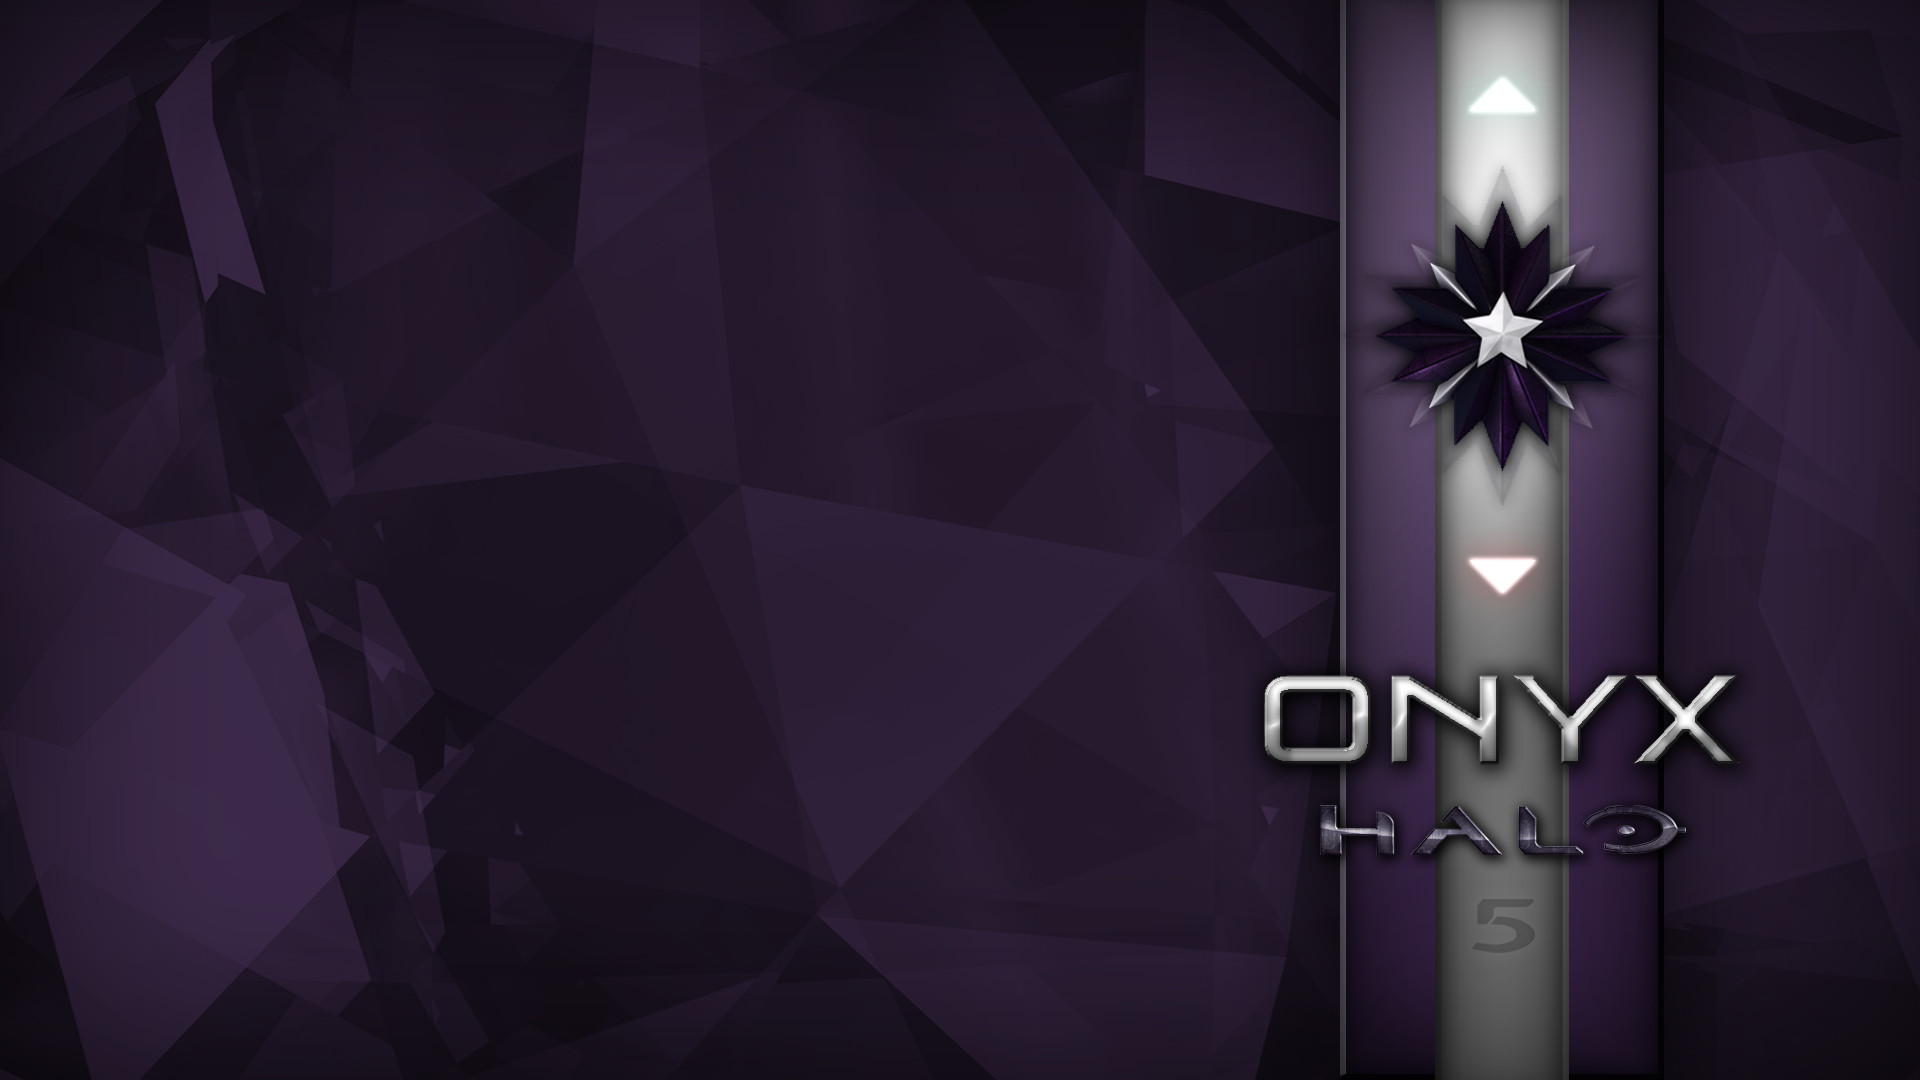 Halo 5 ONYX Rank Background I made 1920×1080 Need #iPhone S #